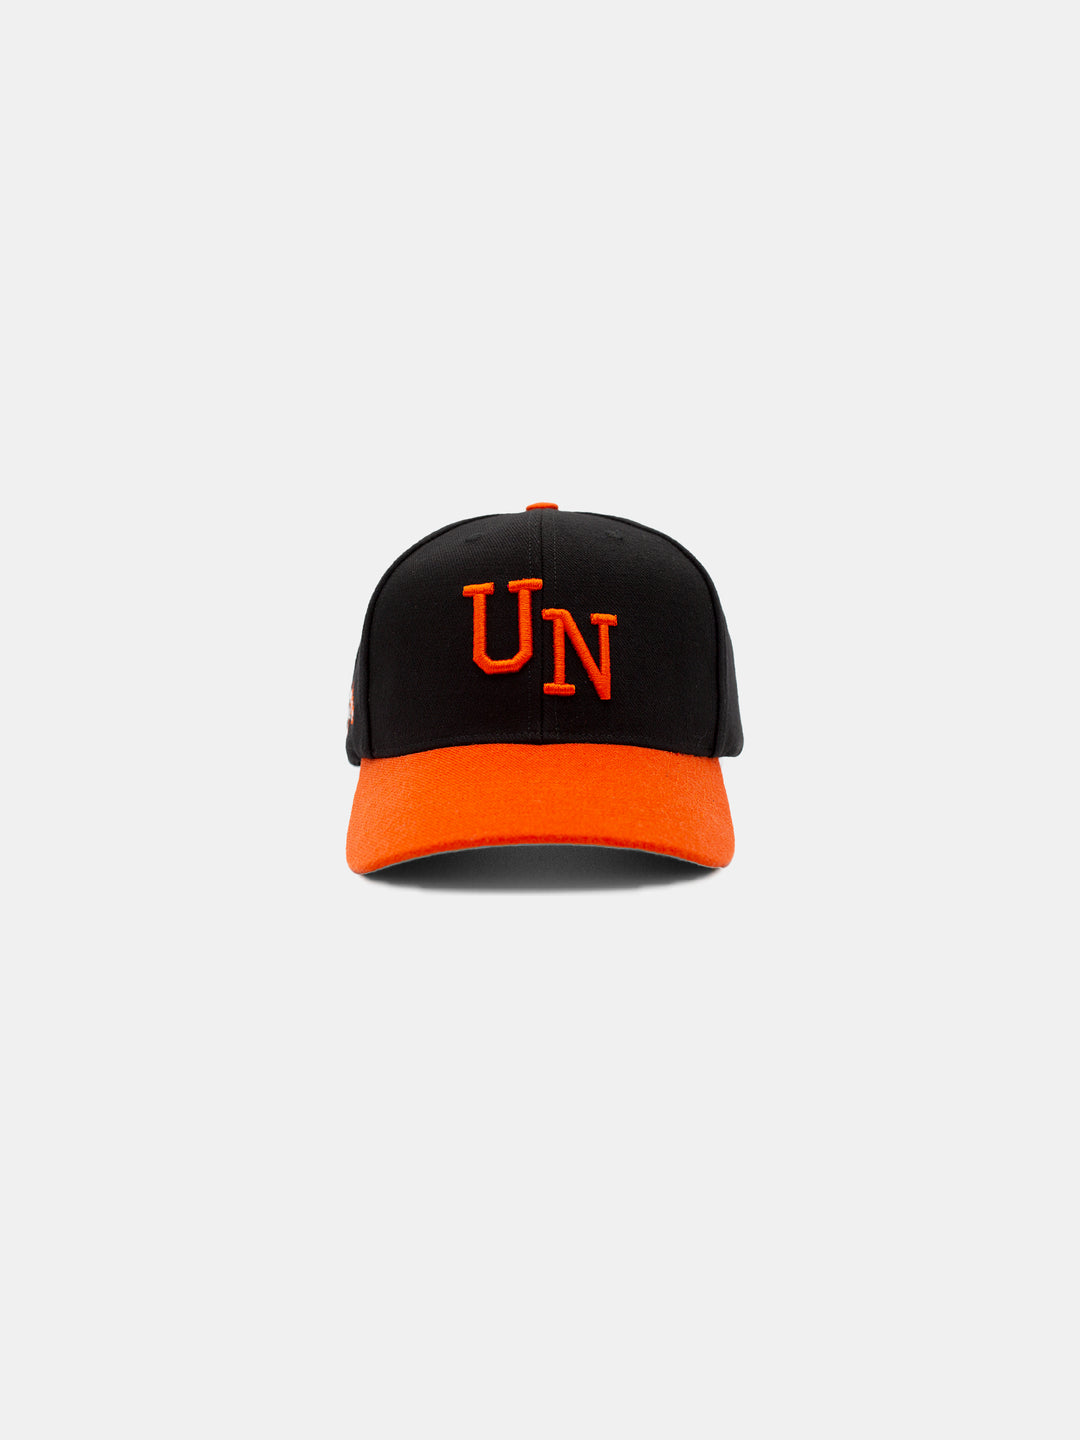 Chosen UN Snapback Hat Black/Orange - Front